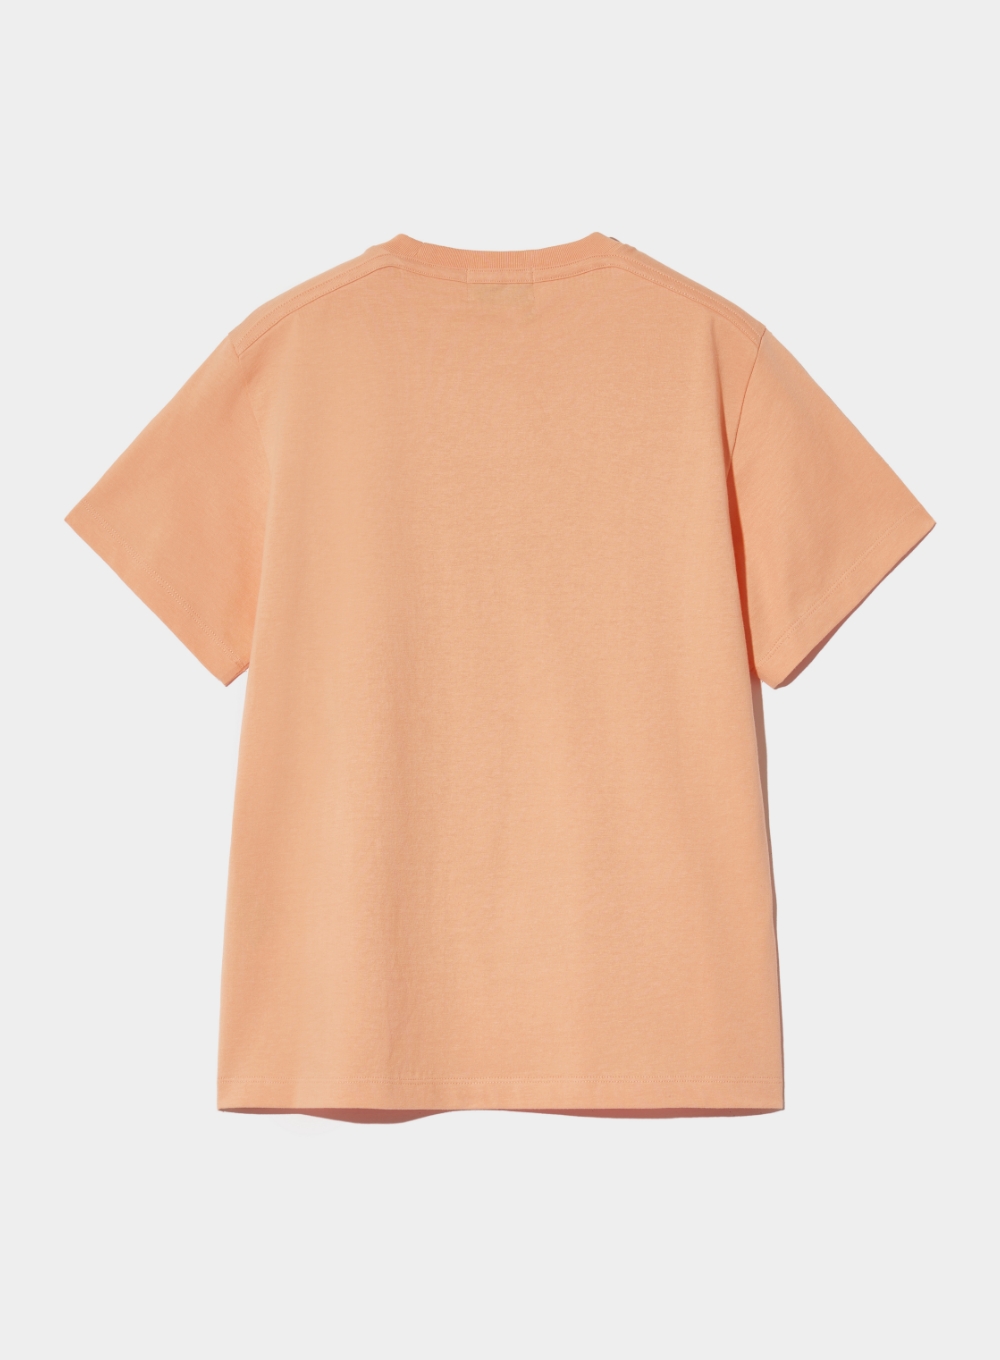 (W) Banana Tree Graphic T-Shirt - Peach Coral